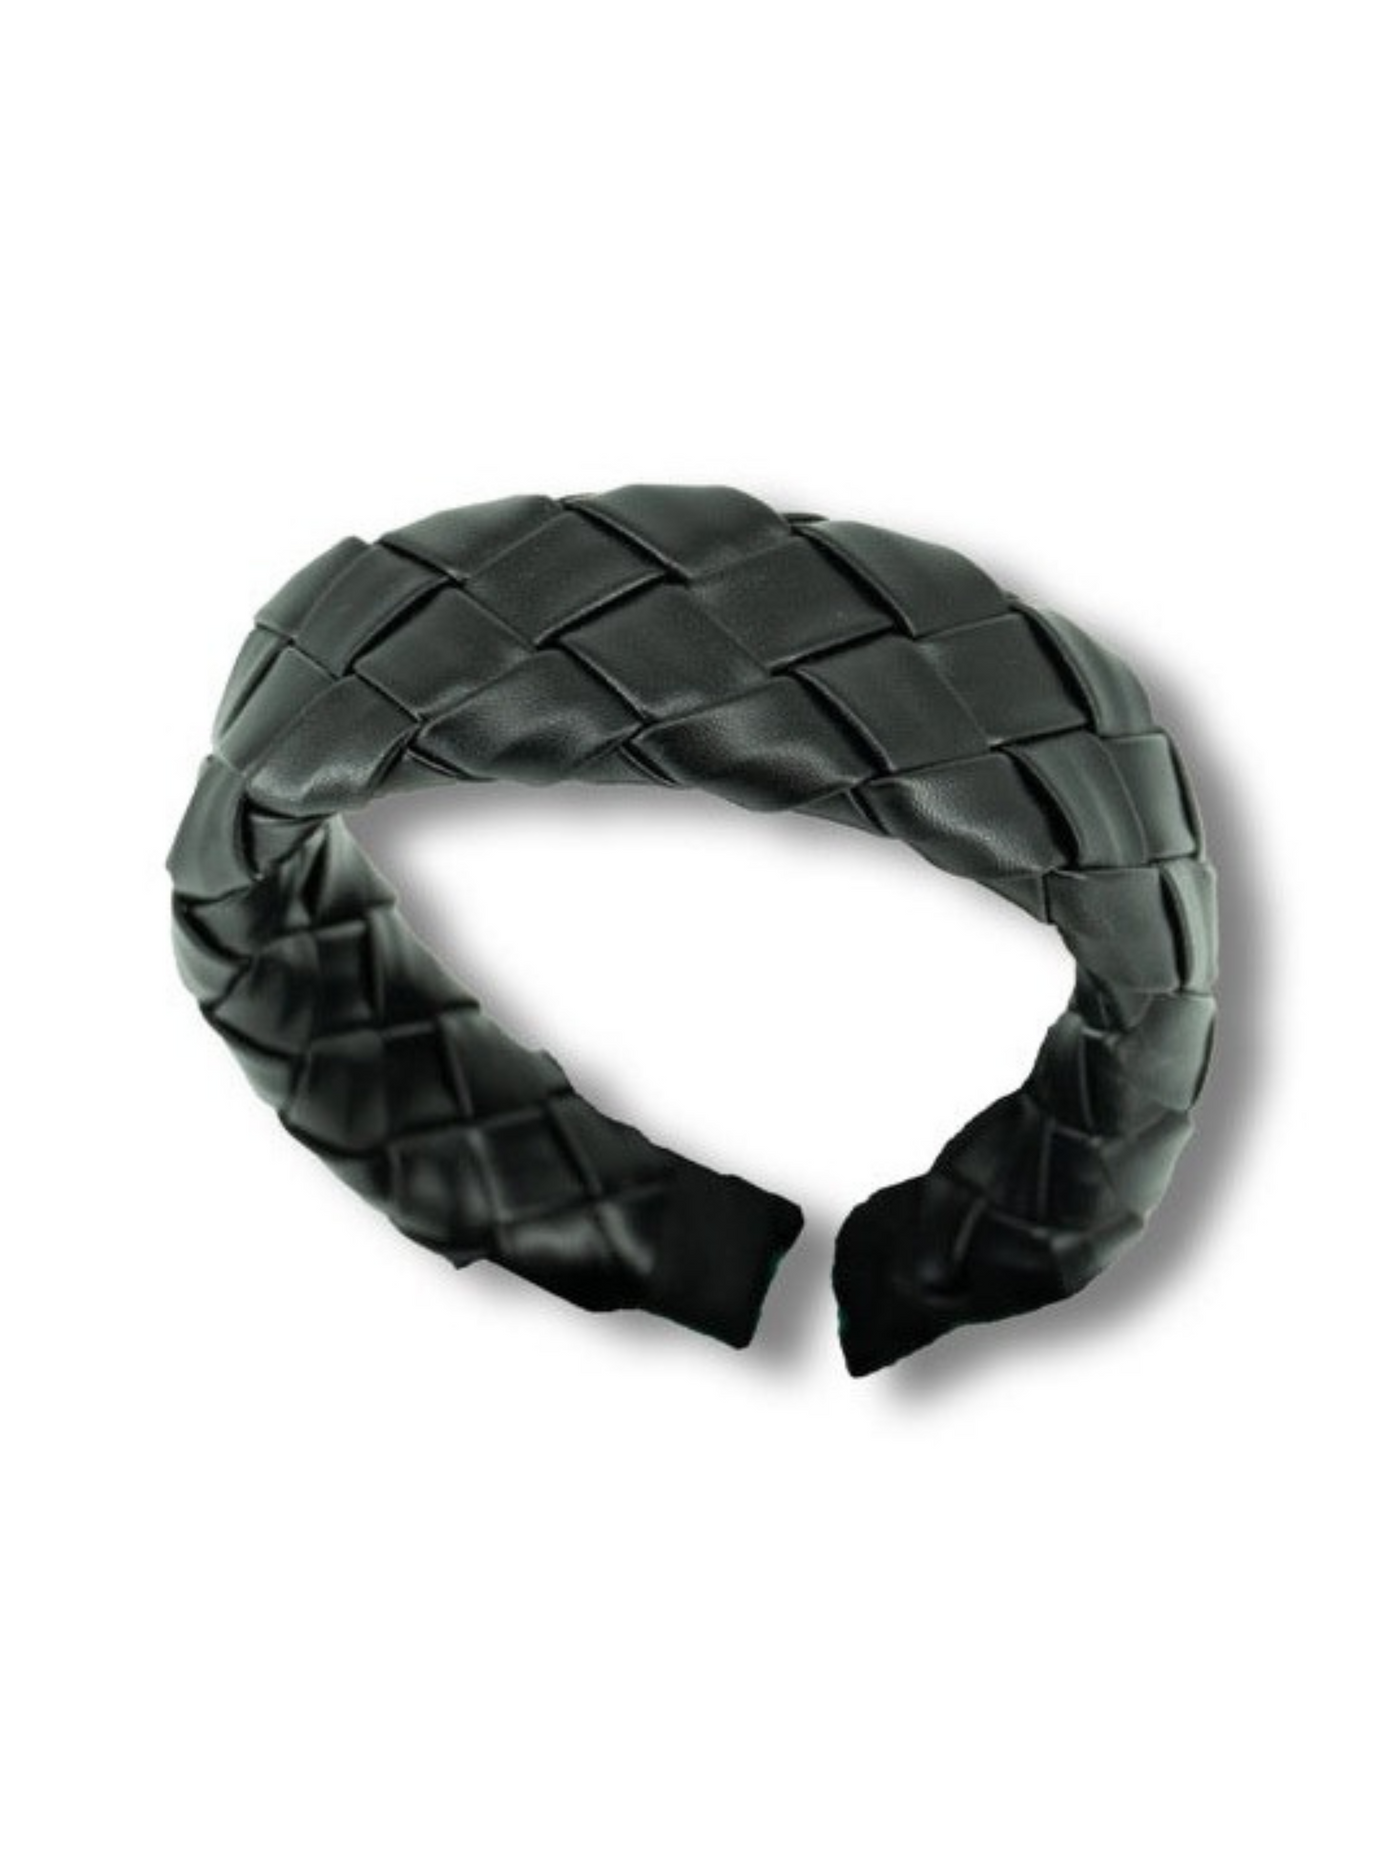 The Enfield Headband